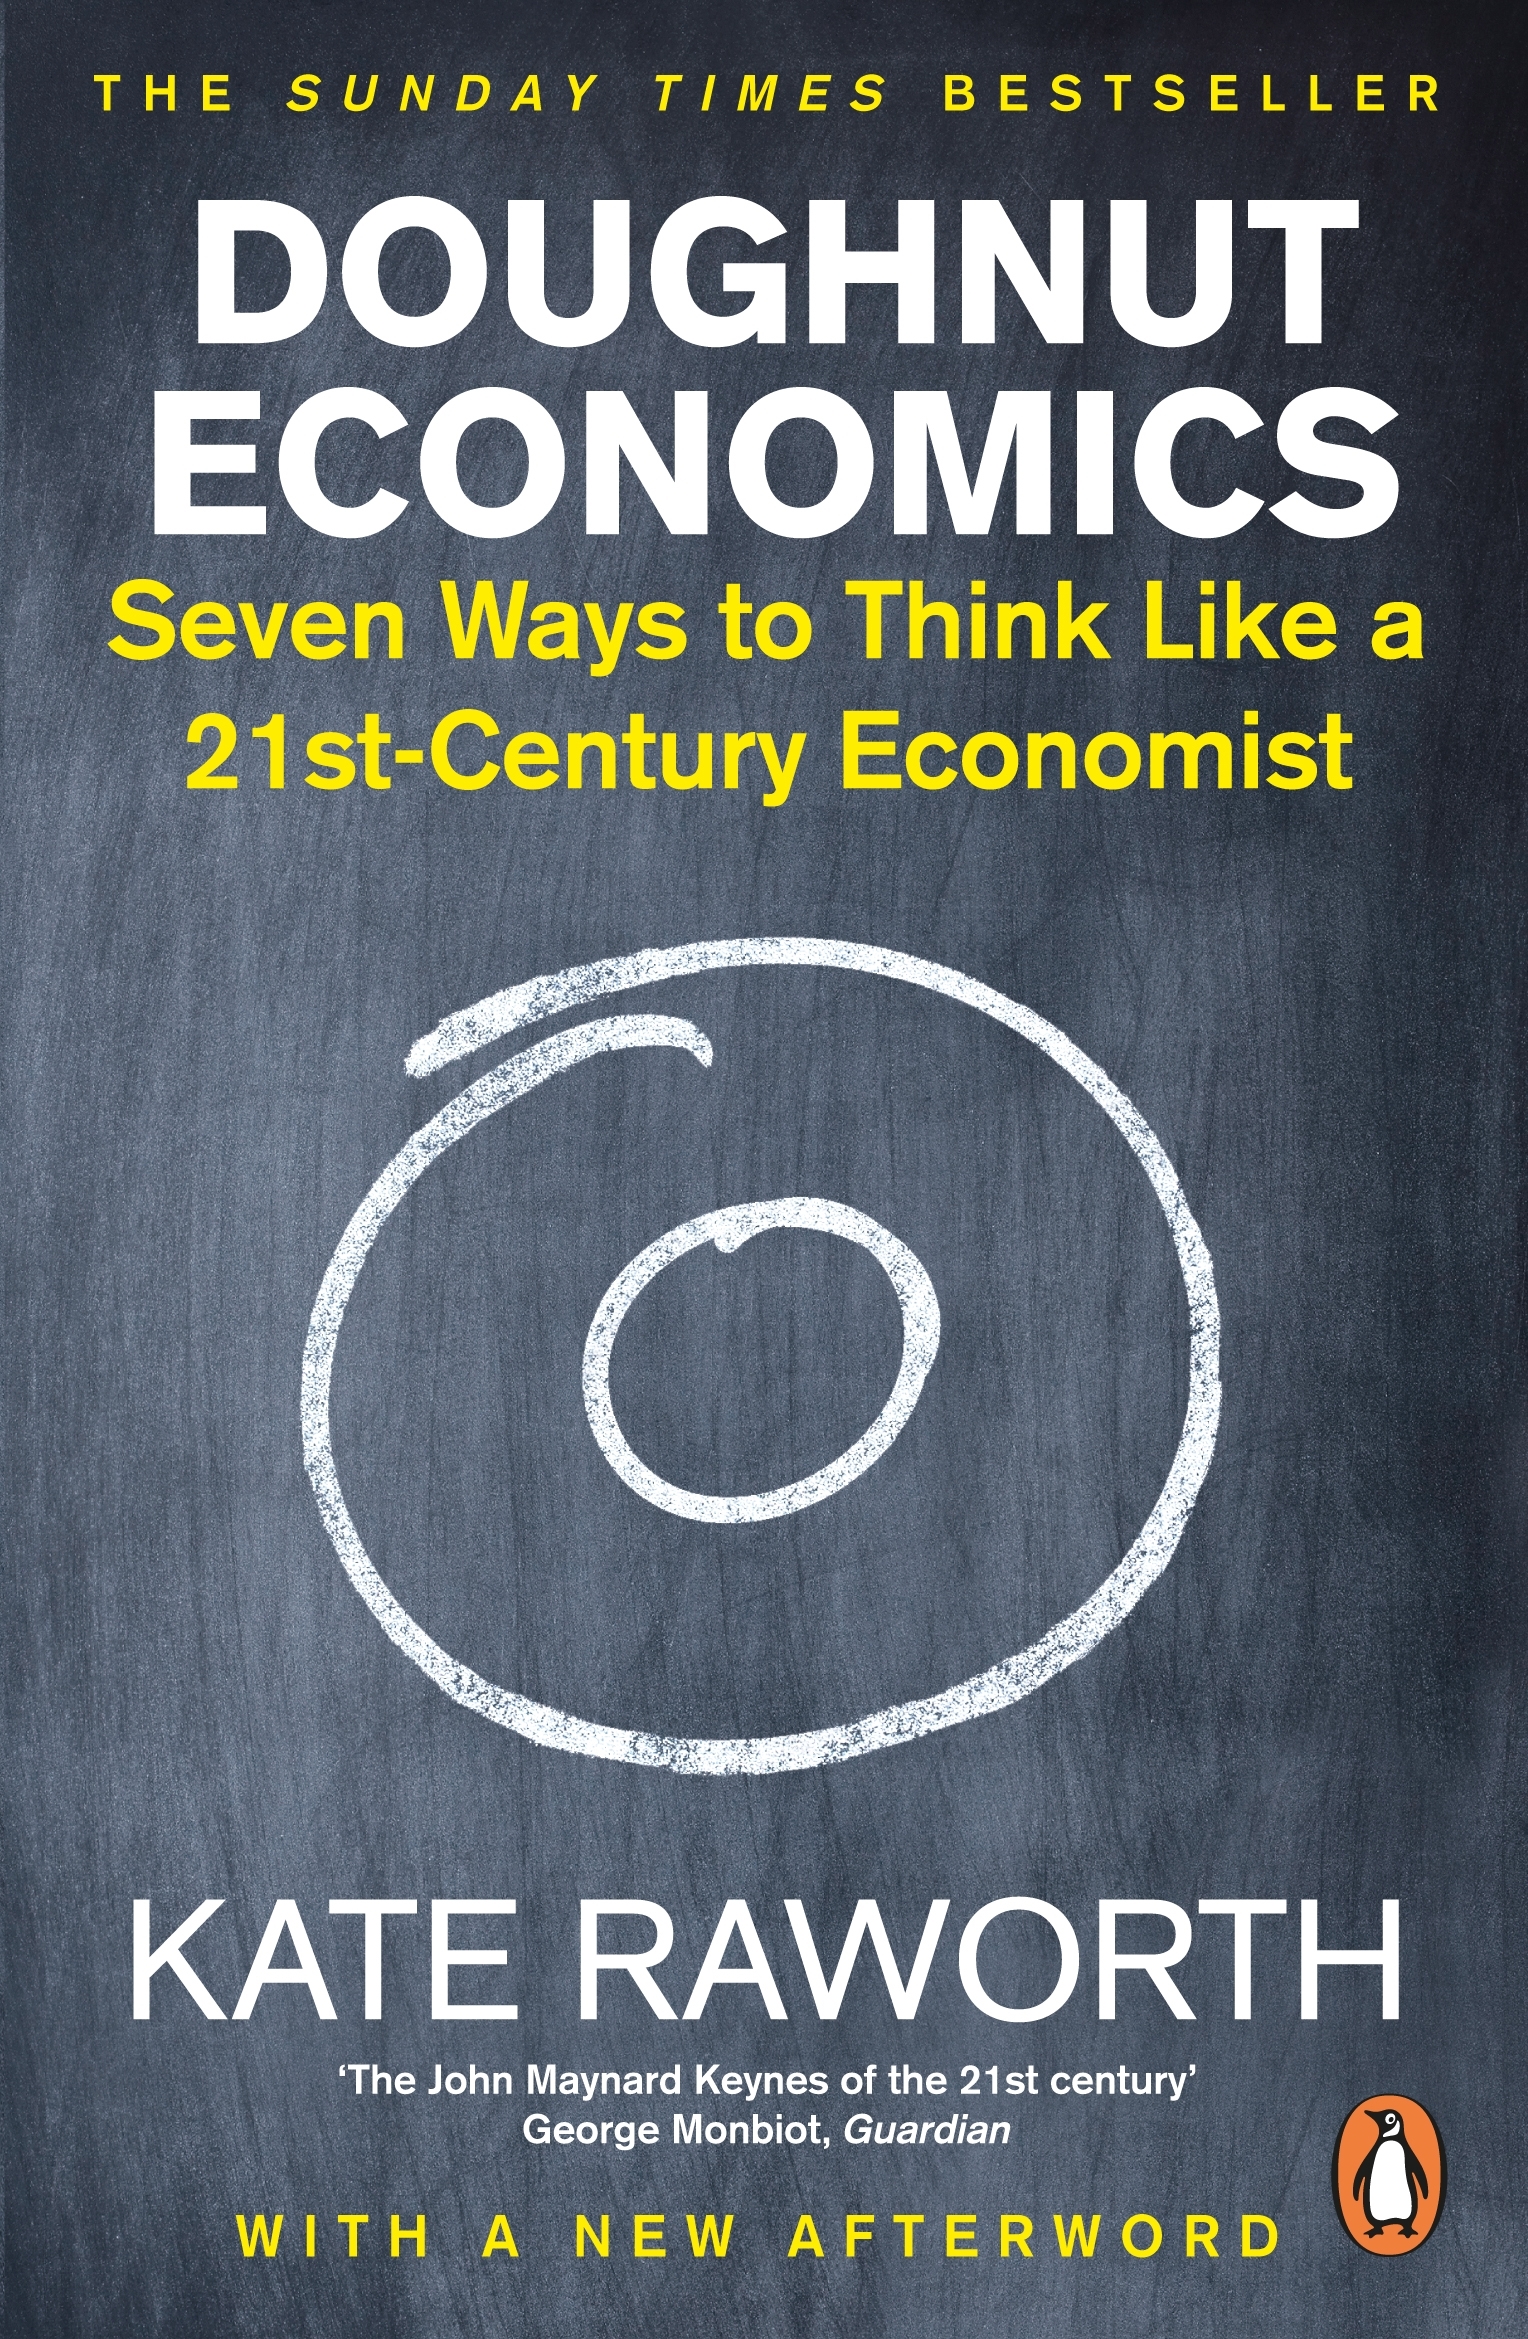 Doughnut Economics by Kate Raworth - Penguin Books Australia